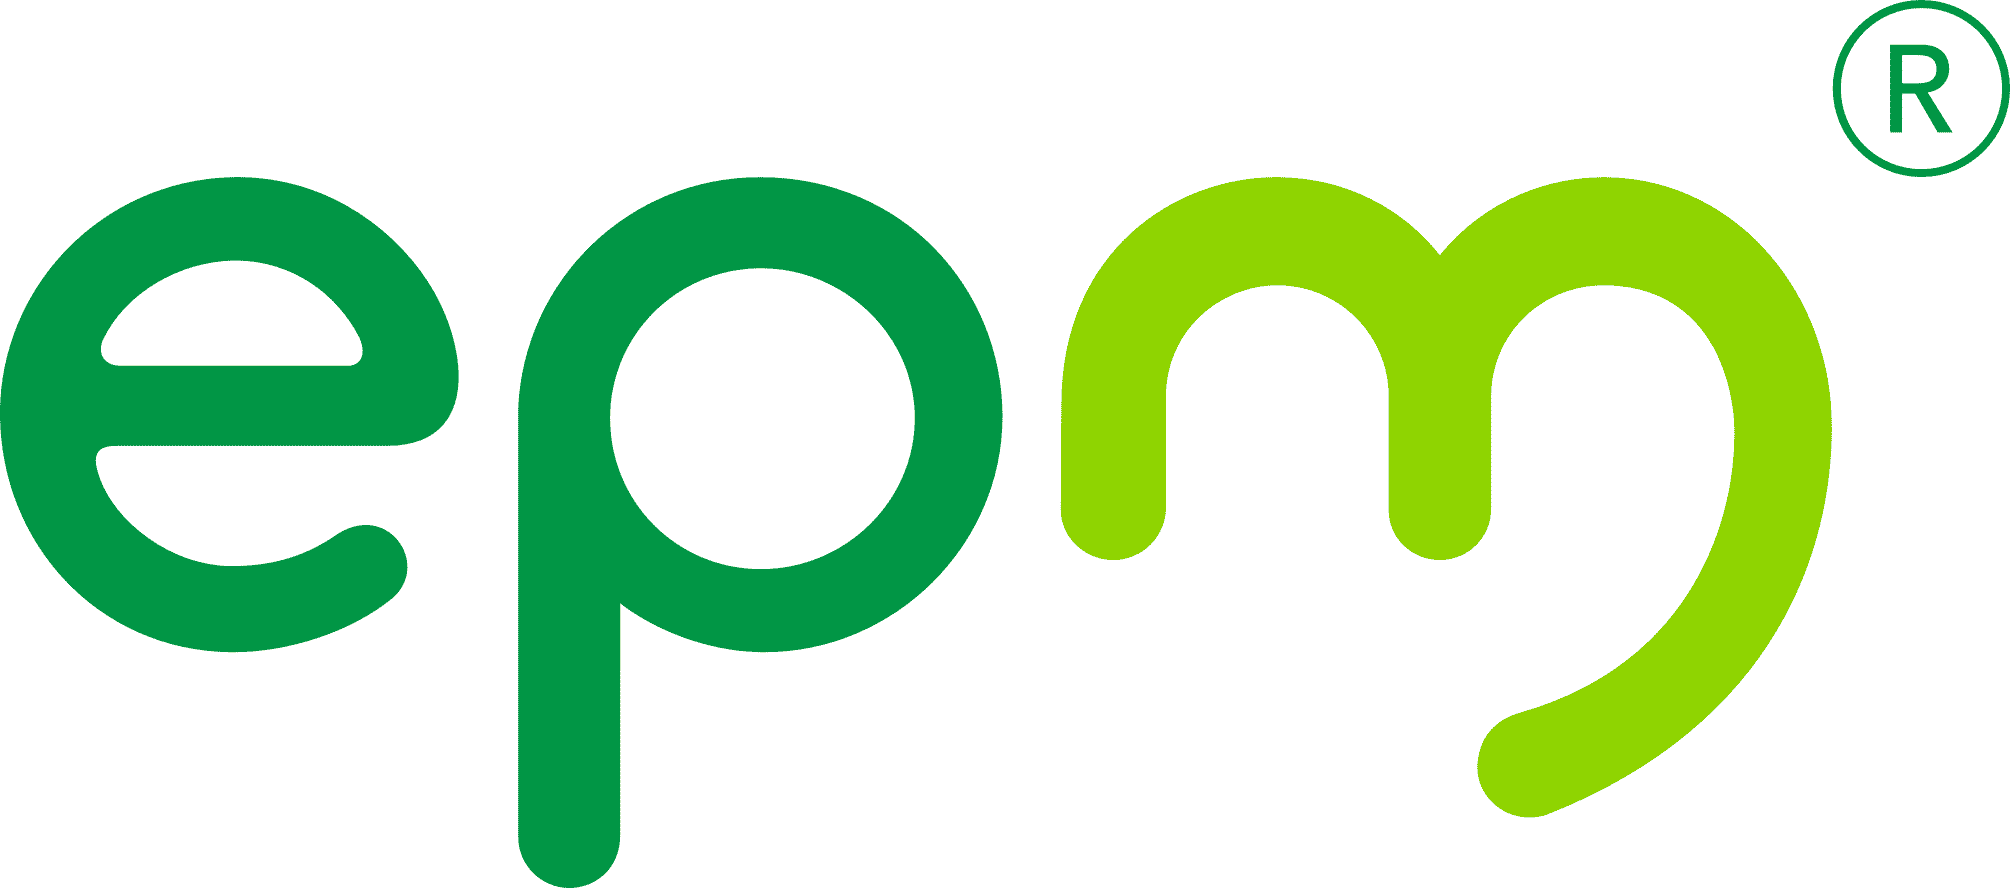 EPM Logo